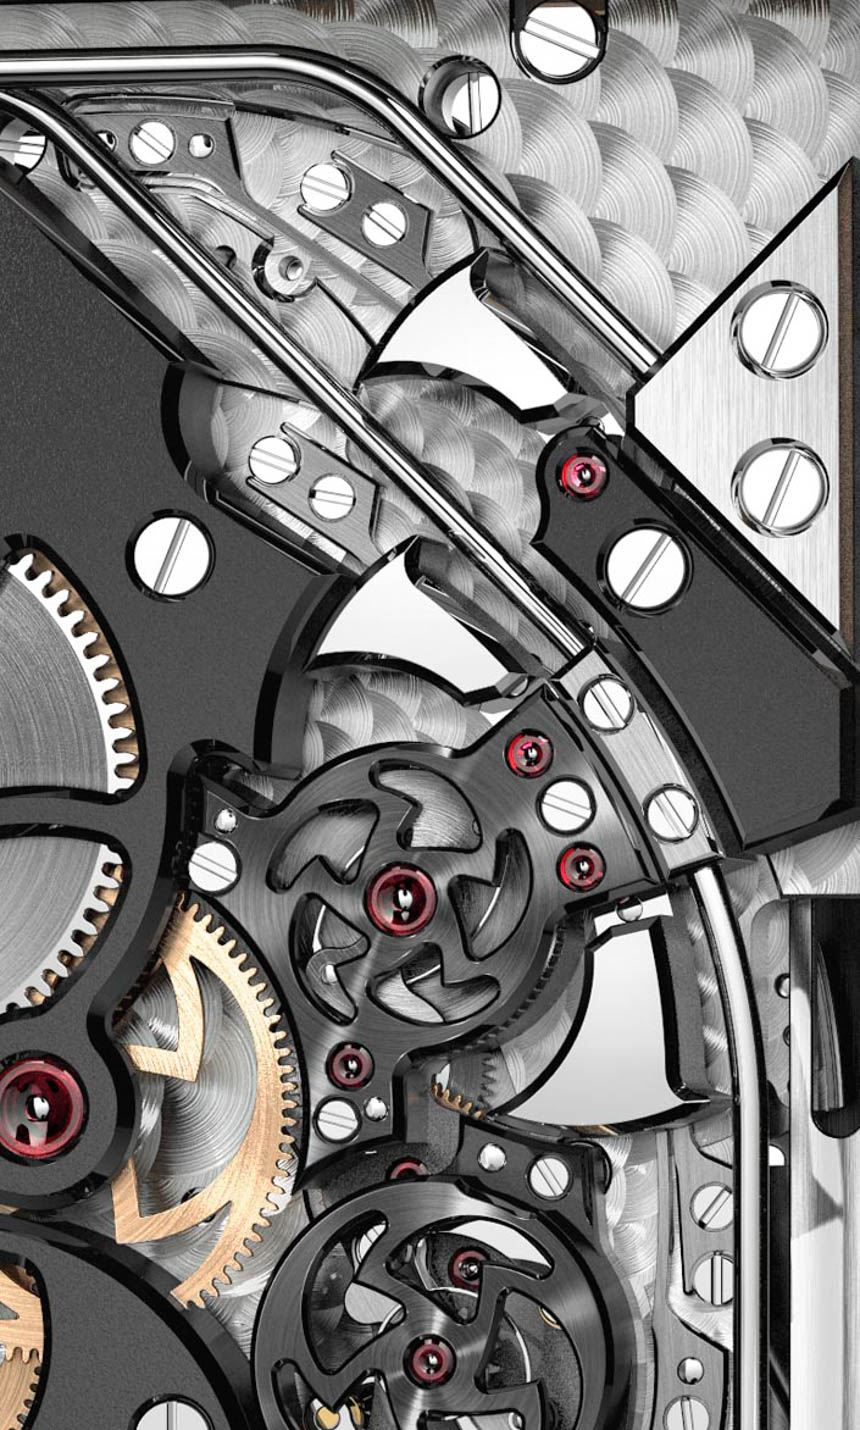 ArtyA 3 Gongs Minute Repeater, Regulator, & Double Axis Tourbillon Replica Watch Replica Watch Releases 